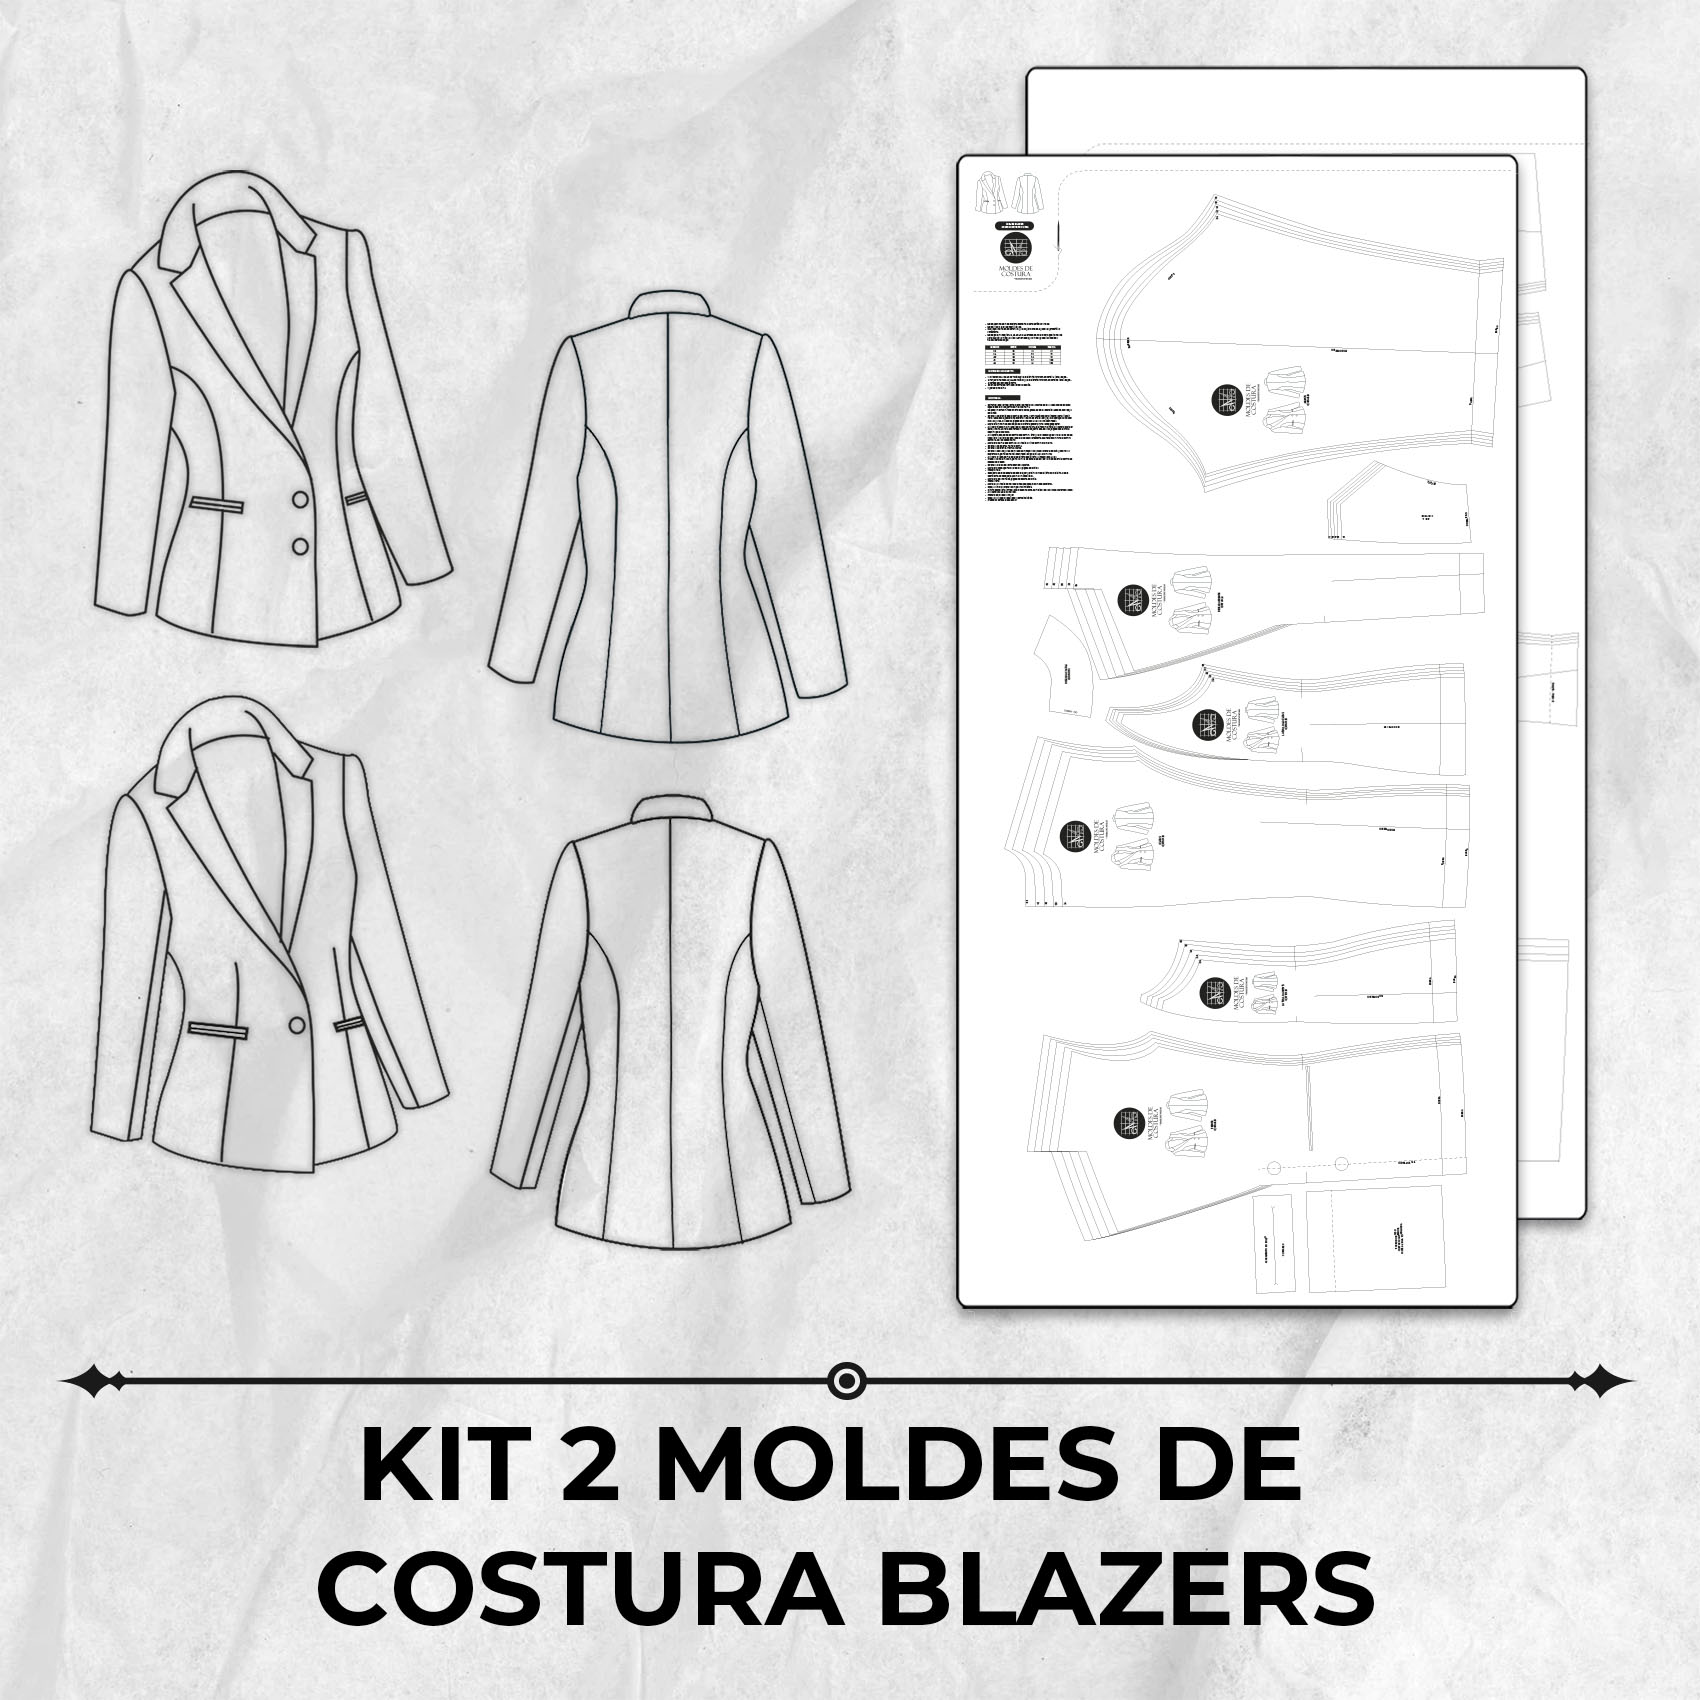 Kit 2 moldes de costura blazers by Marlene Mukai